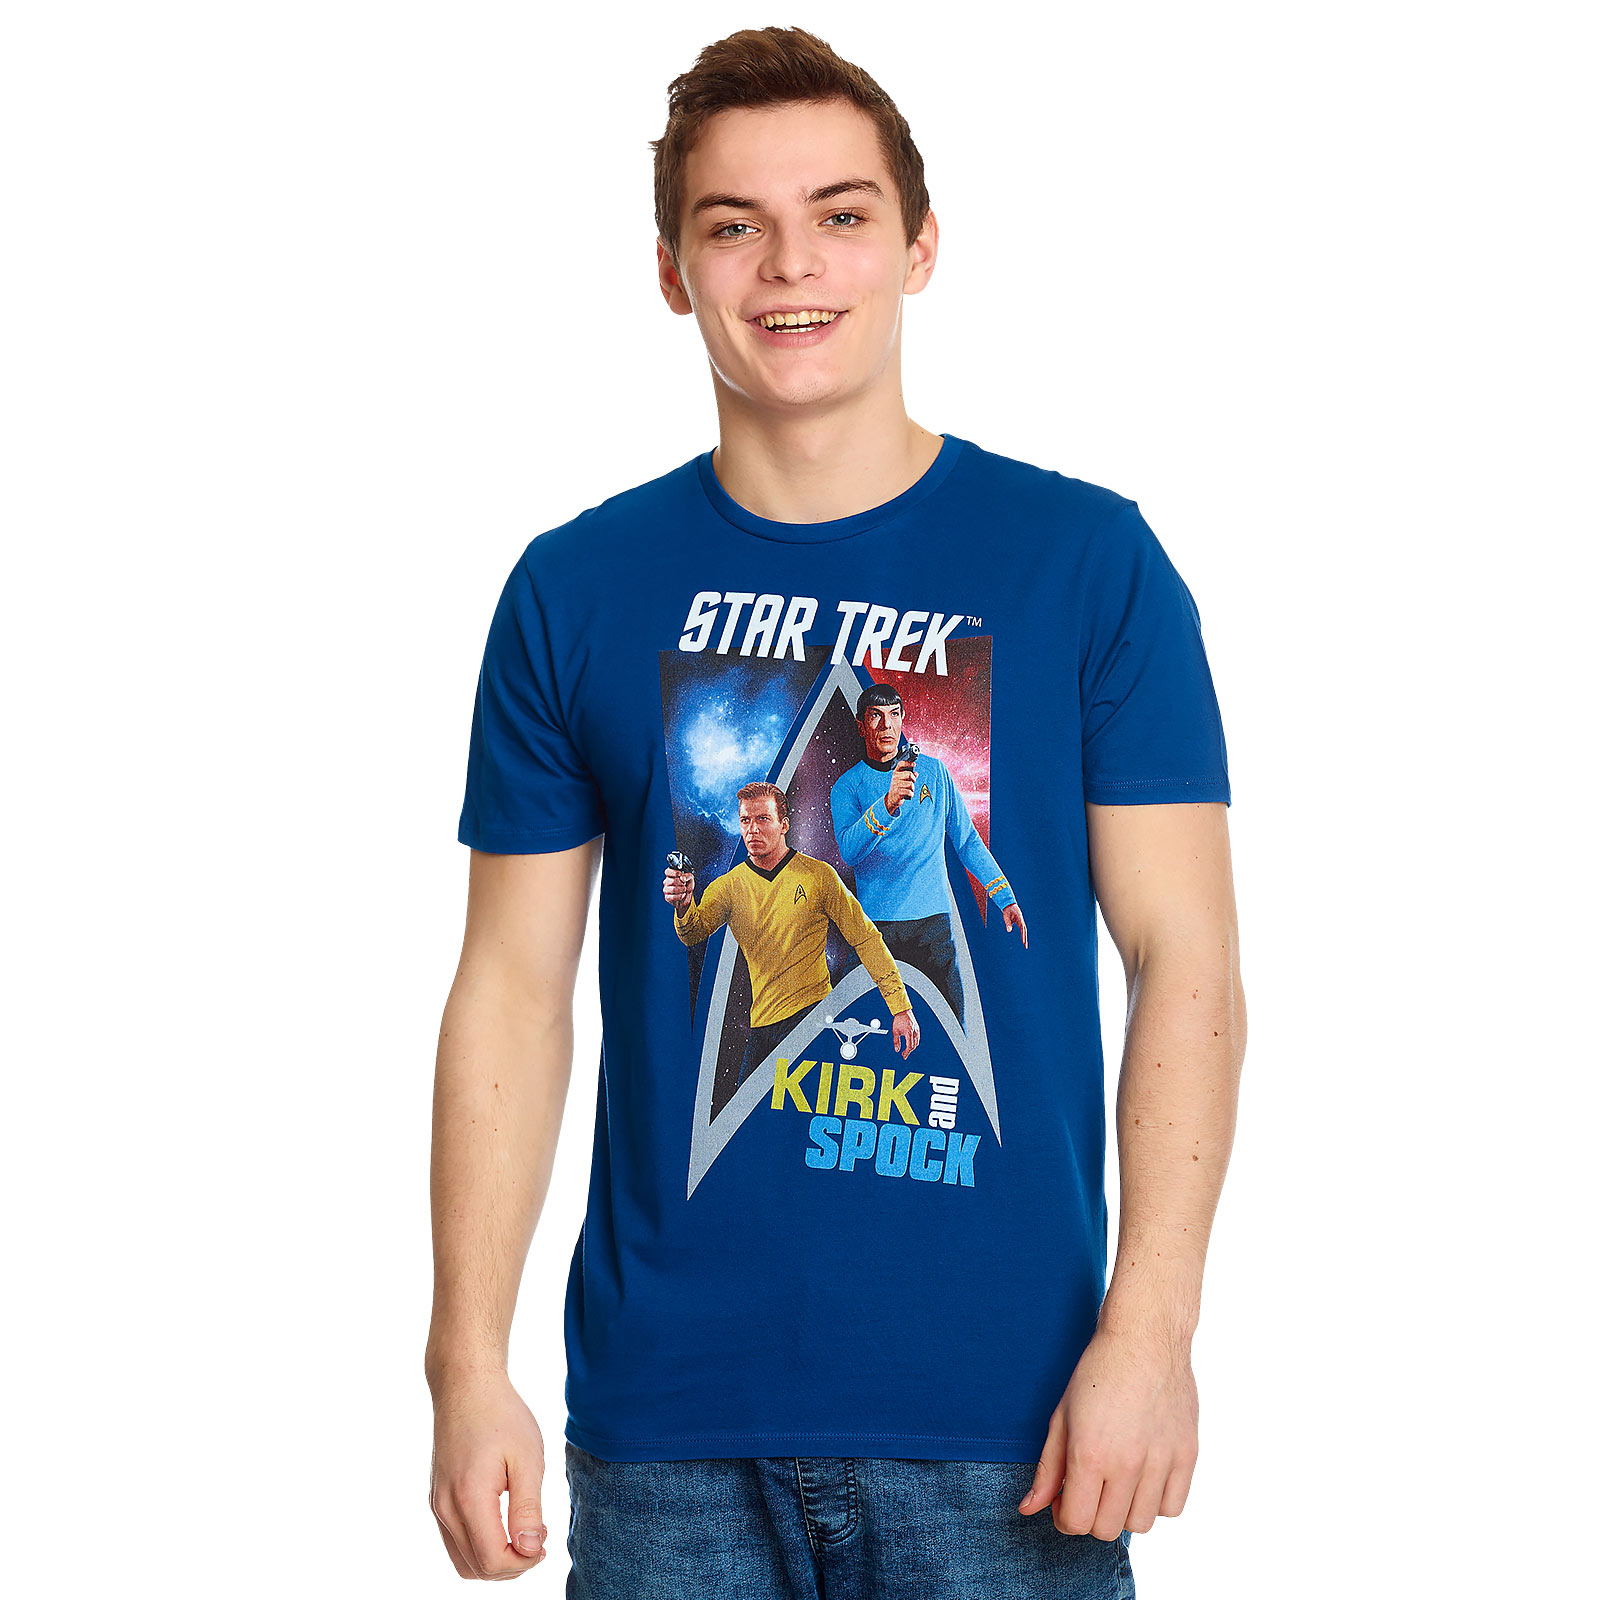 Star Trek - Kirk & Spock T-Shirt blau